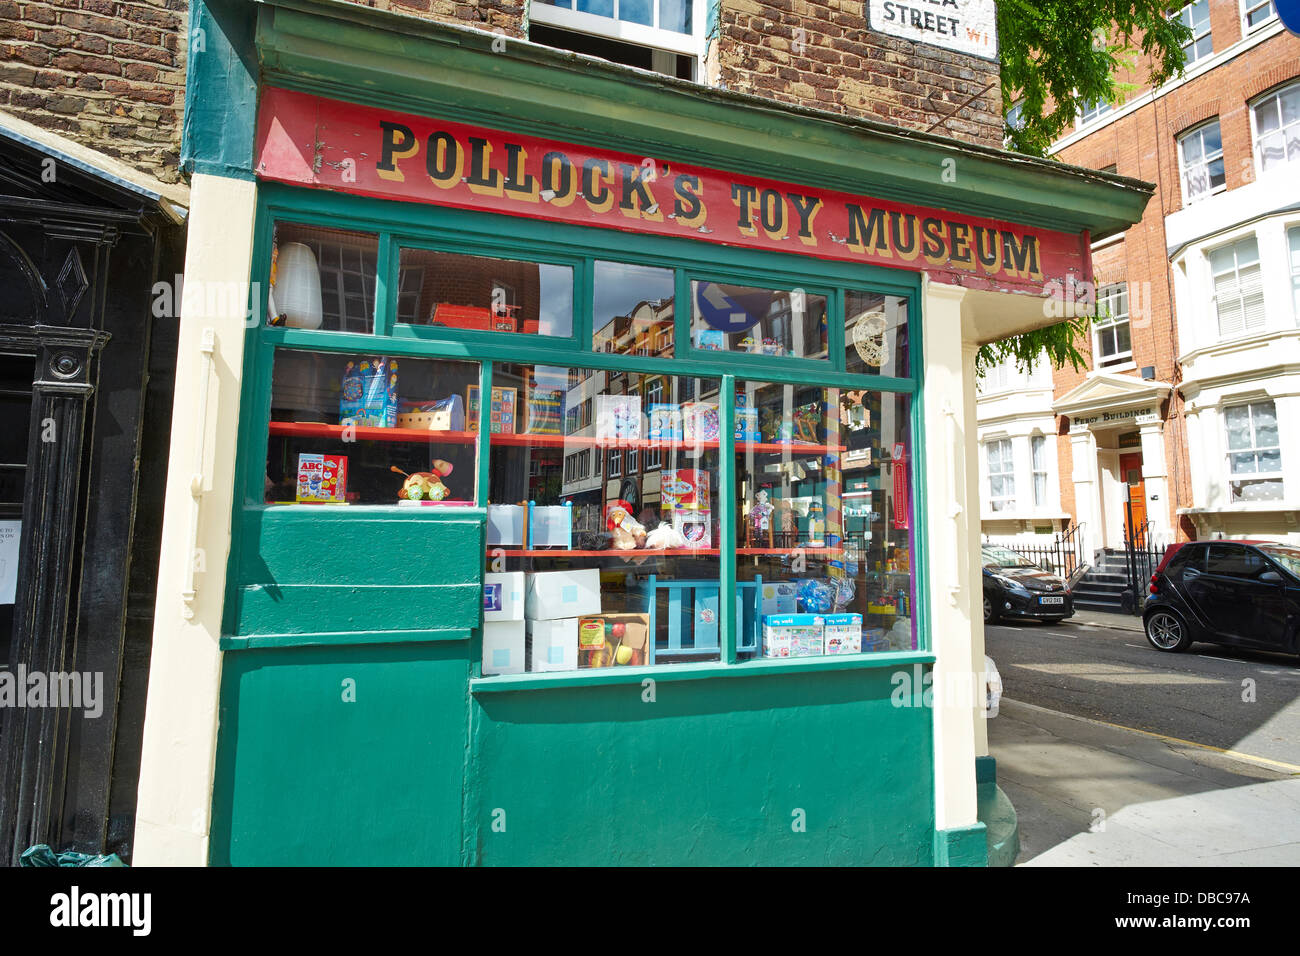 Pollocks Spielzeugmuseum Scala Street London UK Stockfoto